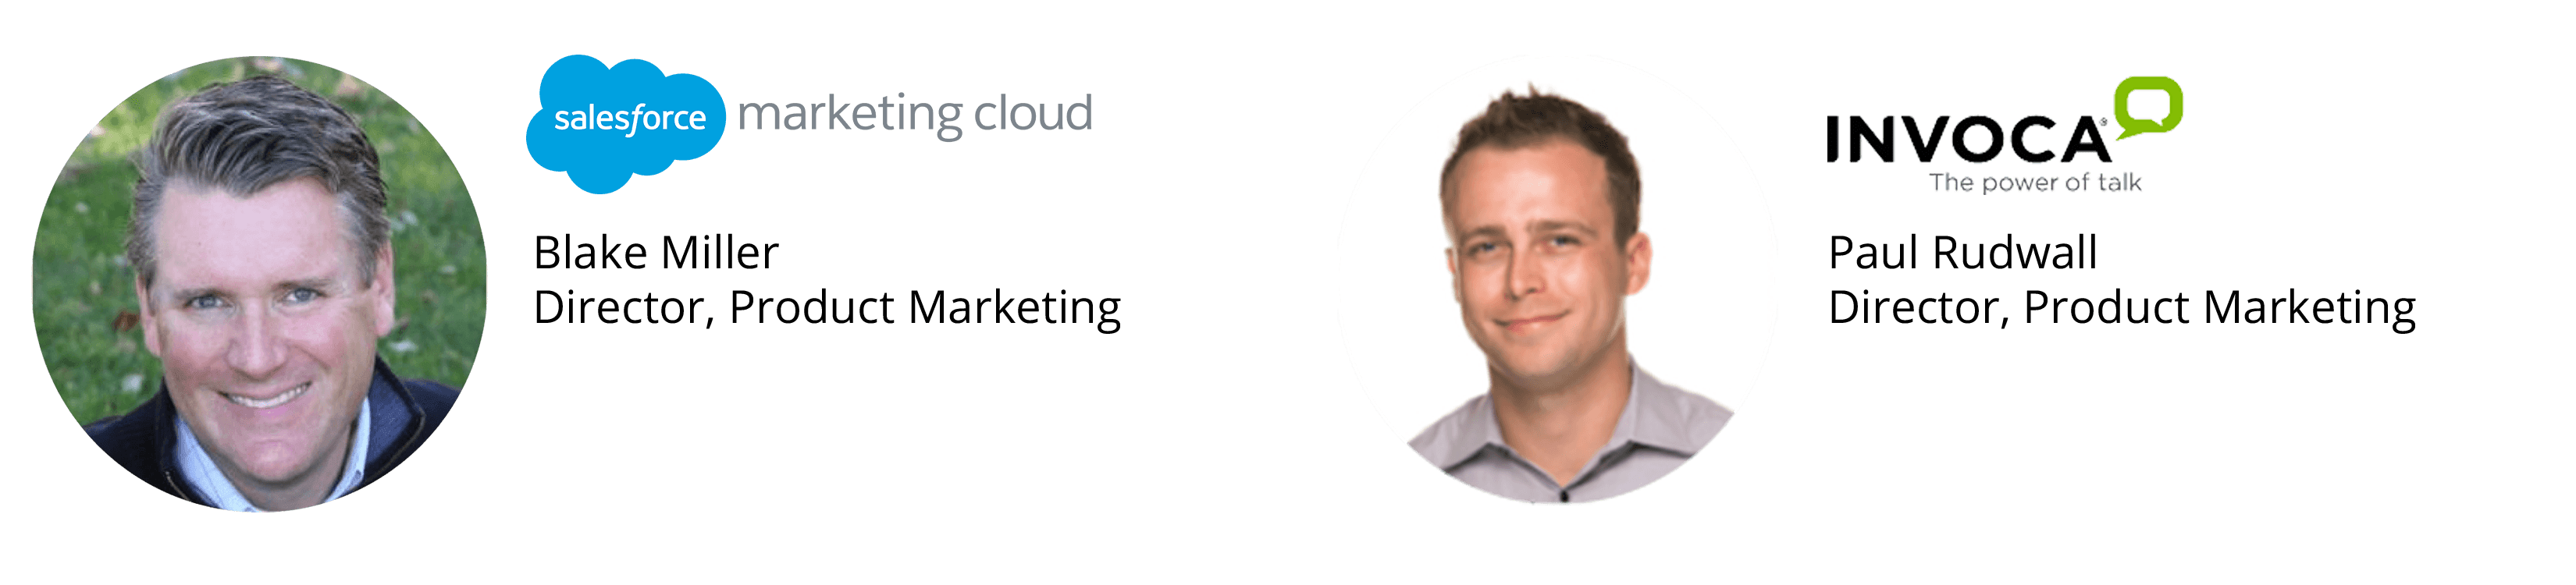 Webinar Panelists for Calls, Meet Marketing Cloud